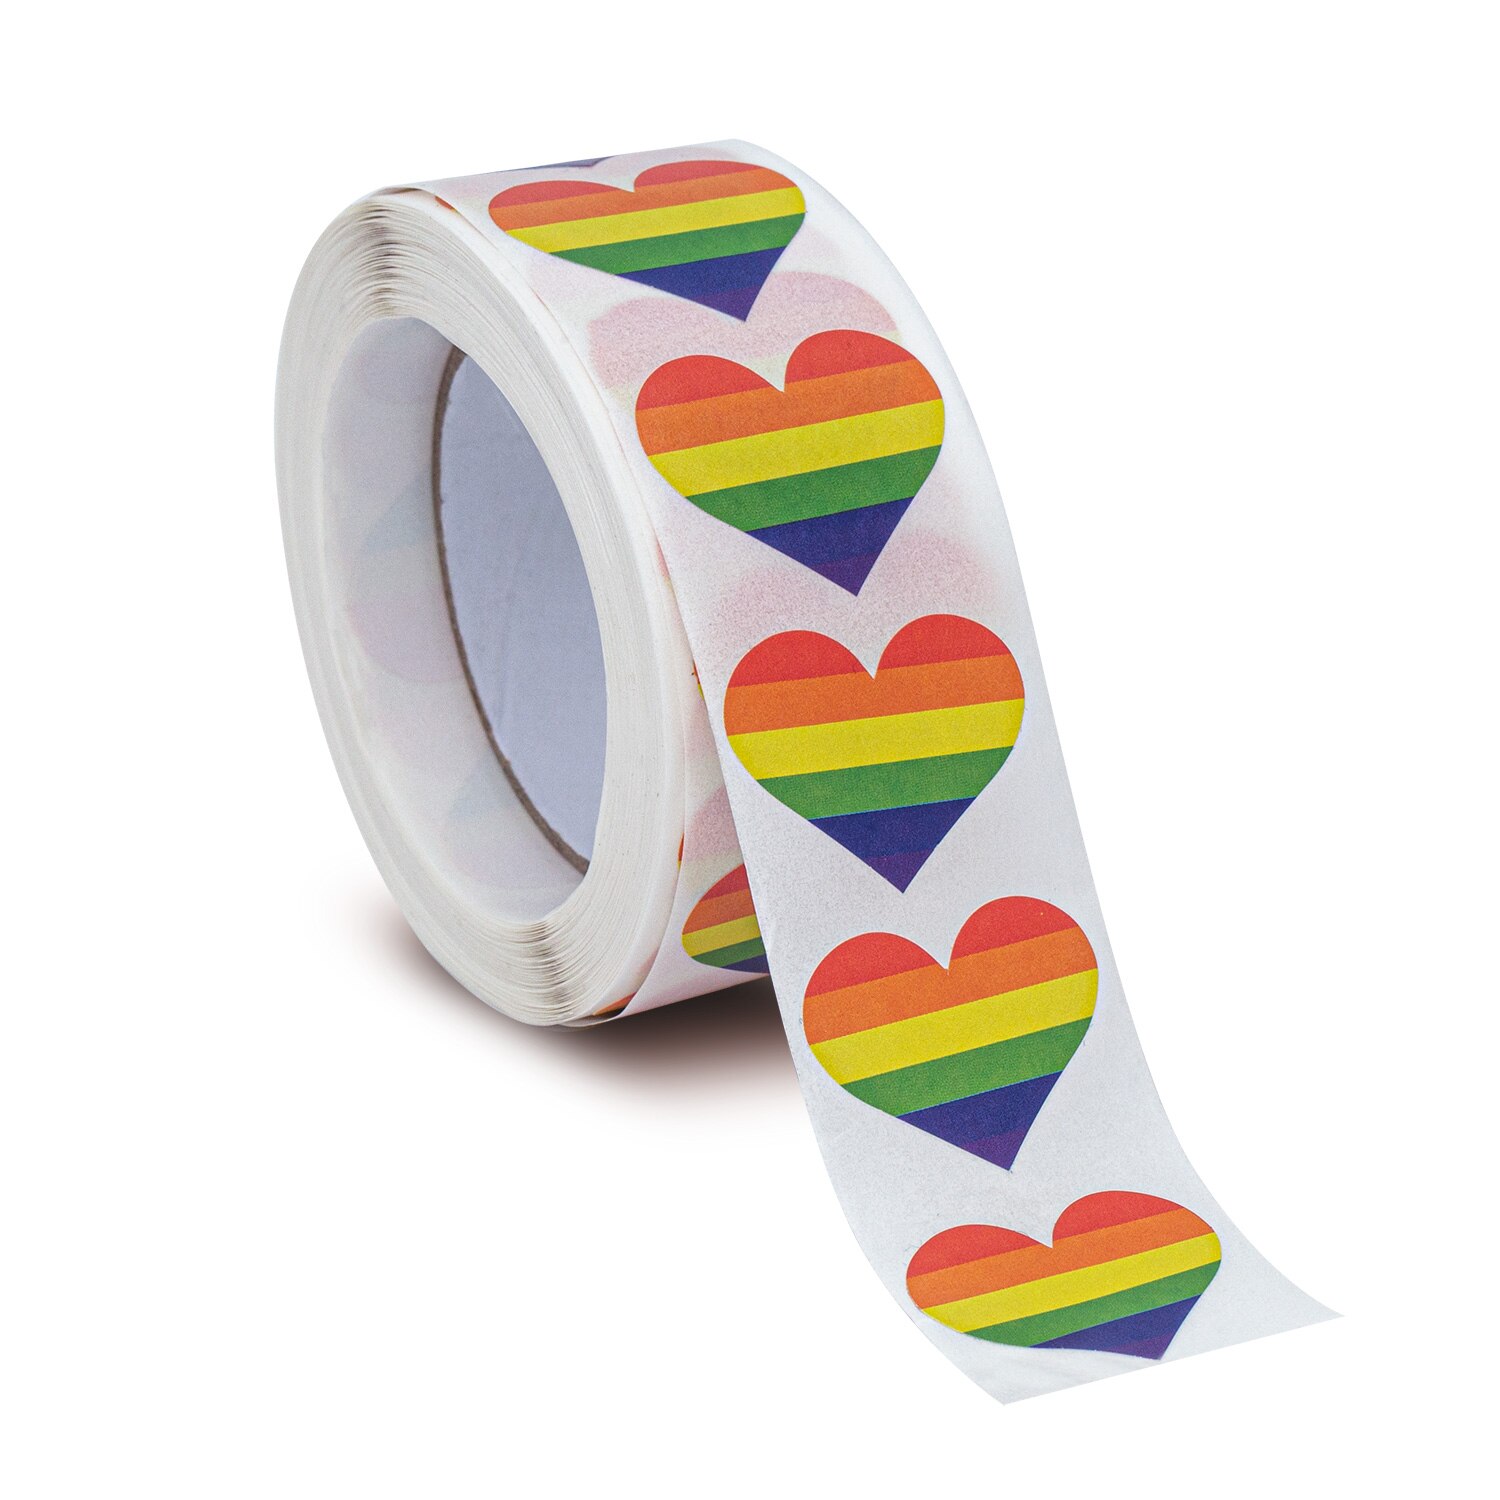 https://www.prideoutlet.com/catalog/images/product/PrideOutlet-500PCS-Stickers-25mm-Rainbow-Stickers.jpeg